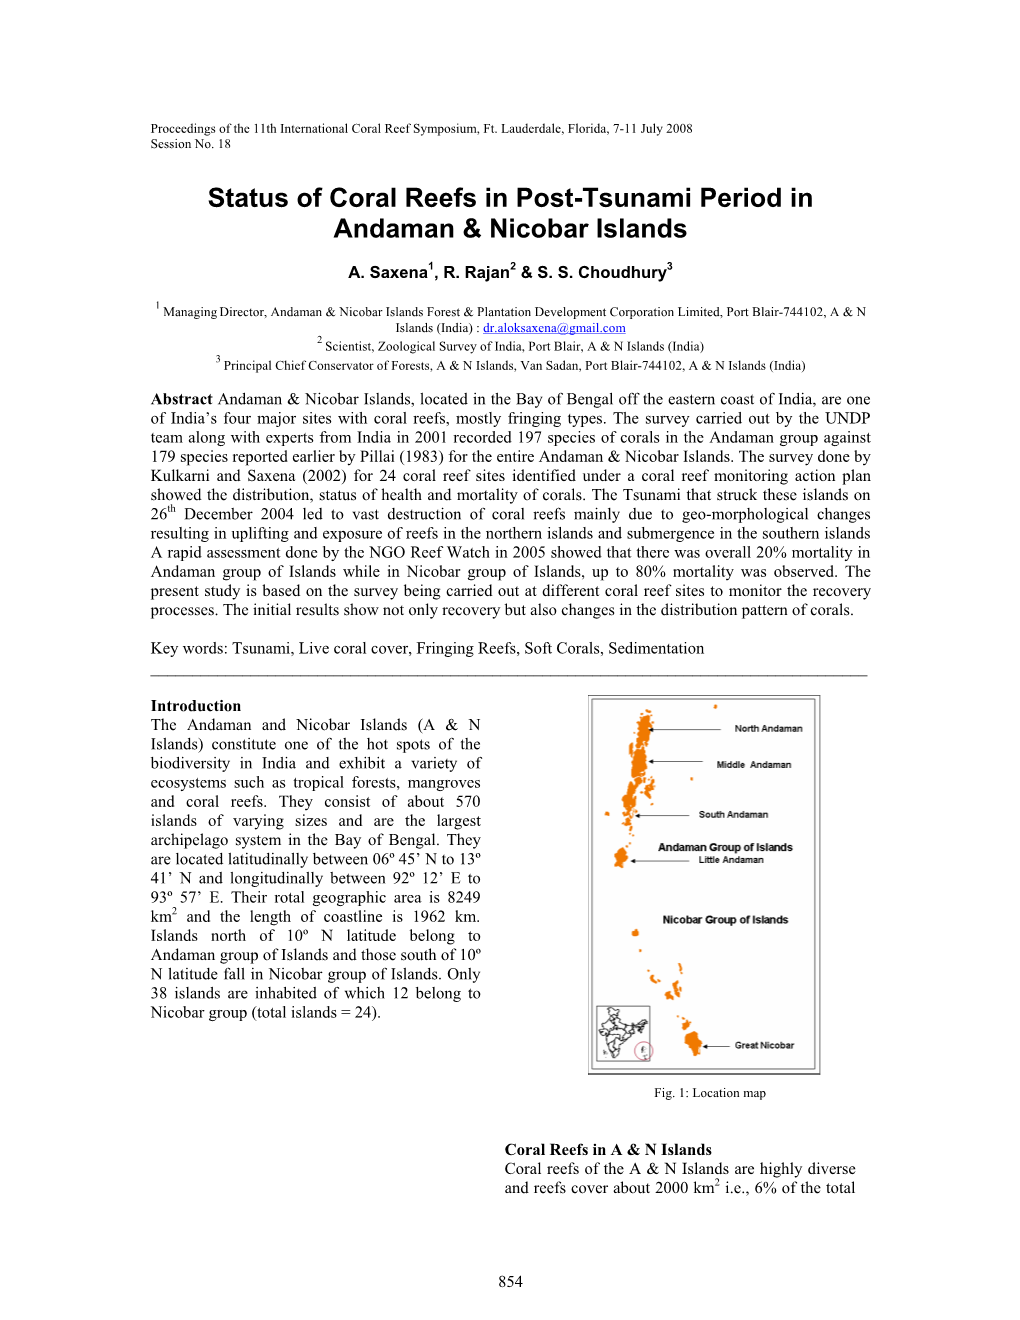 Status of Coral Reefs in Post-Tsunami Period in Andaman & Nicobar Islands